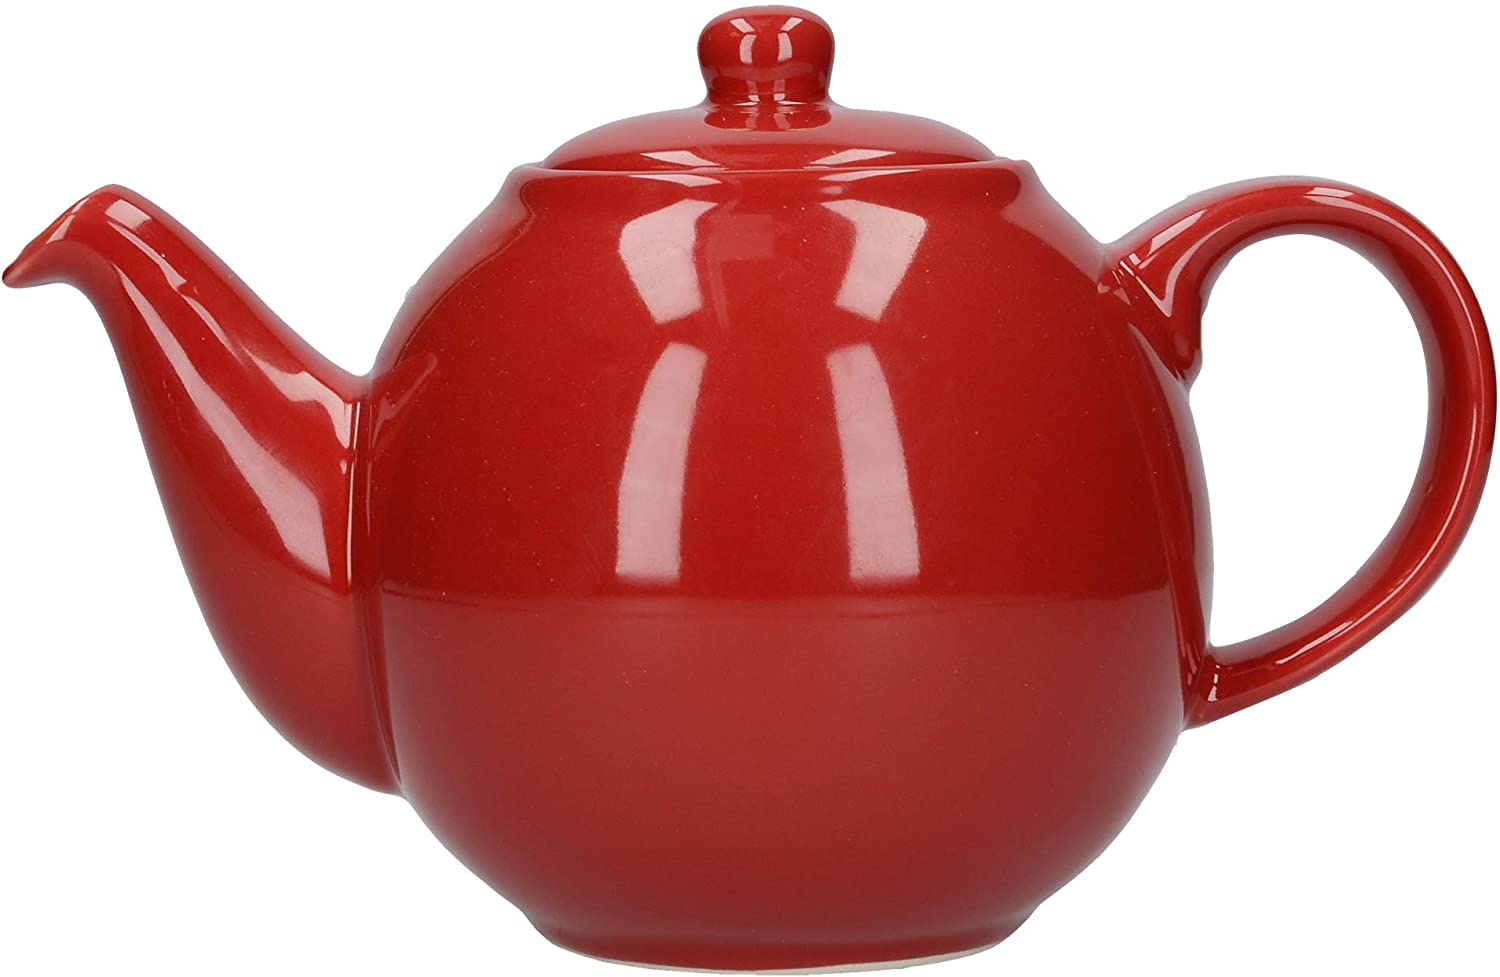 Dexam London Pottery 2 Cup Globe Teapot Red